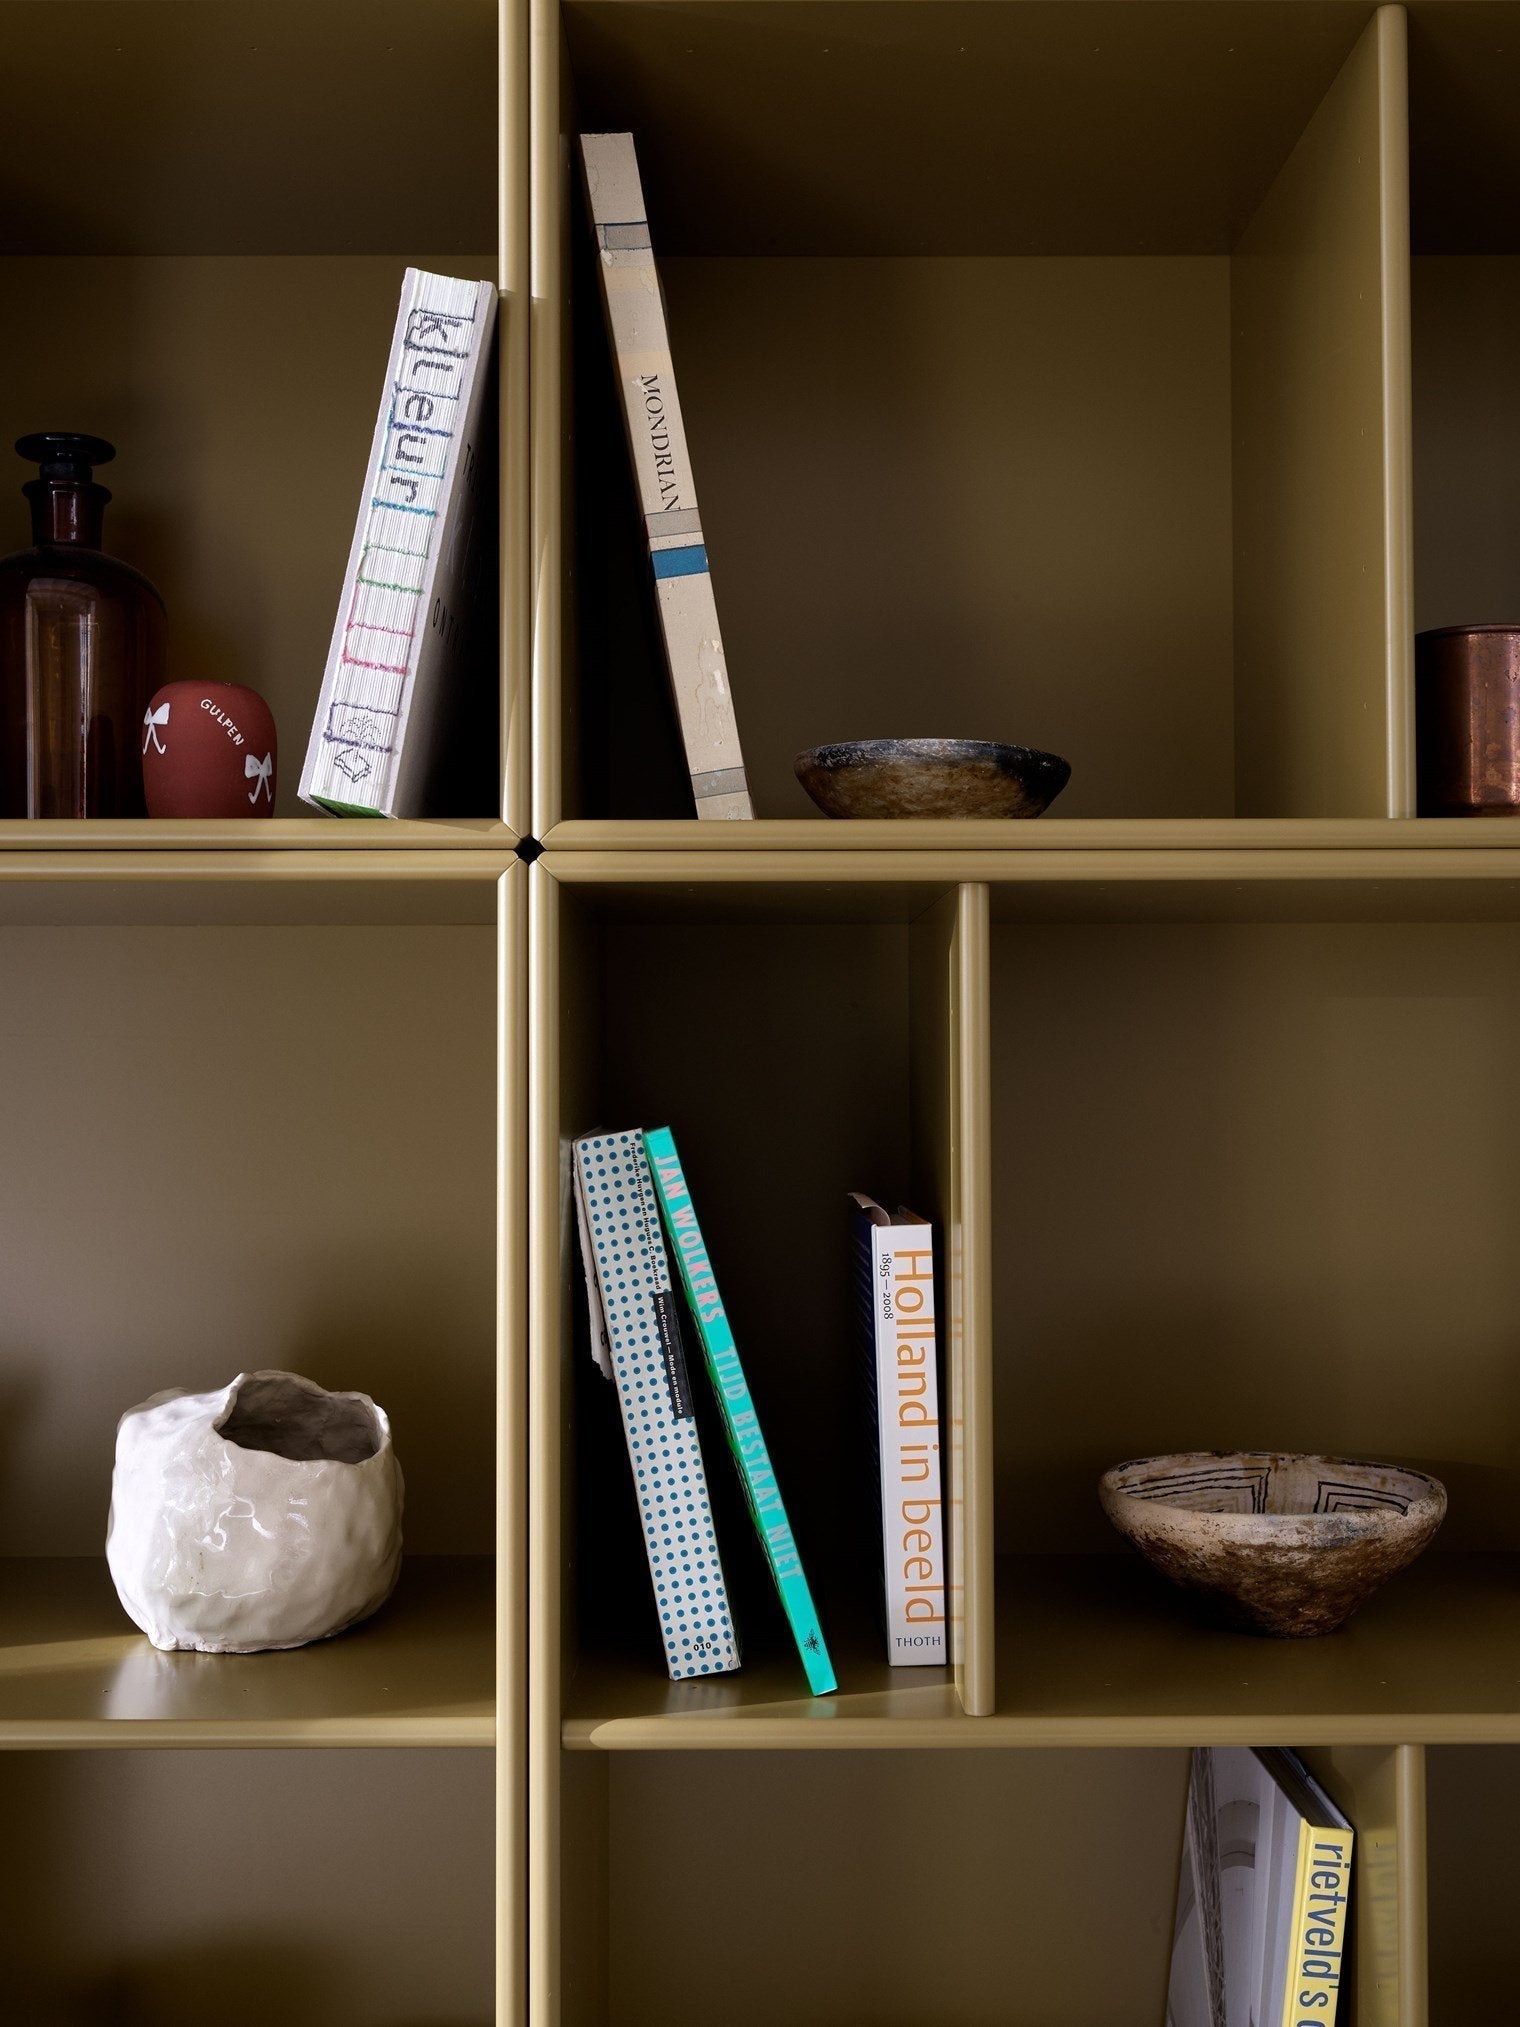 Montana Read Spacious Bookshelf With 3 Cm Plinth, Parsley Green